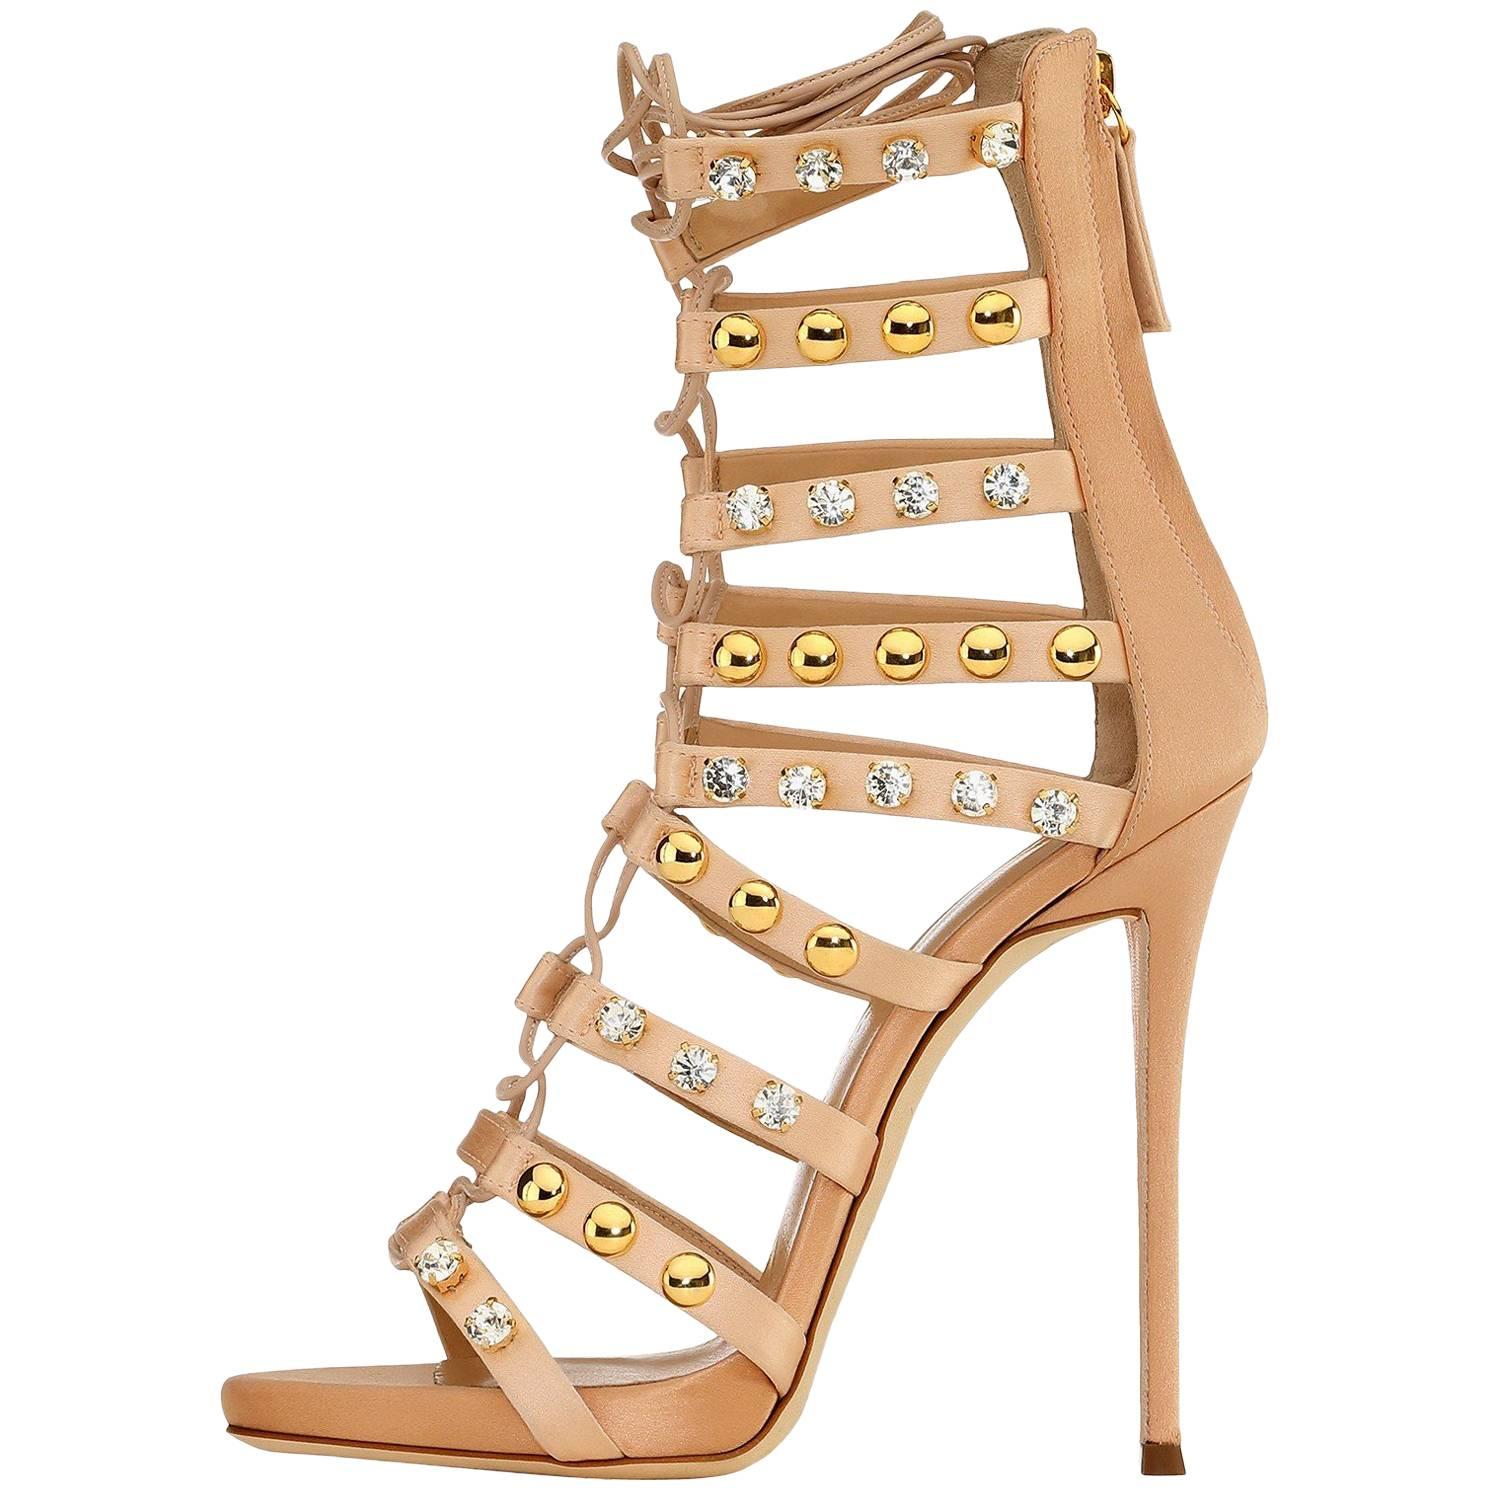 Giuseppe Zanotti New Blush Suede Gold Jewel Evening Sandals Heels in Box